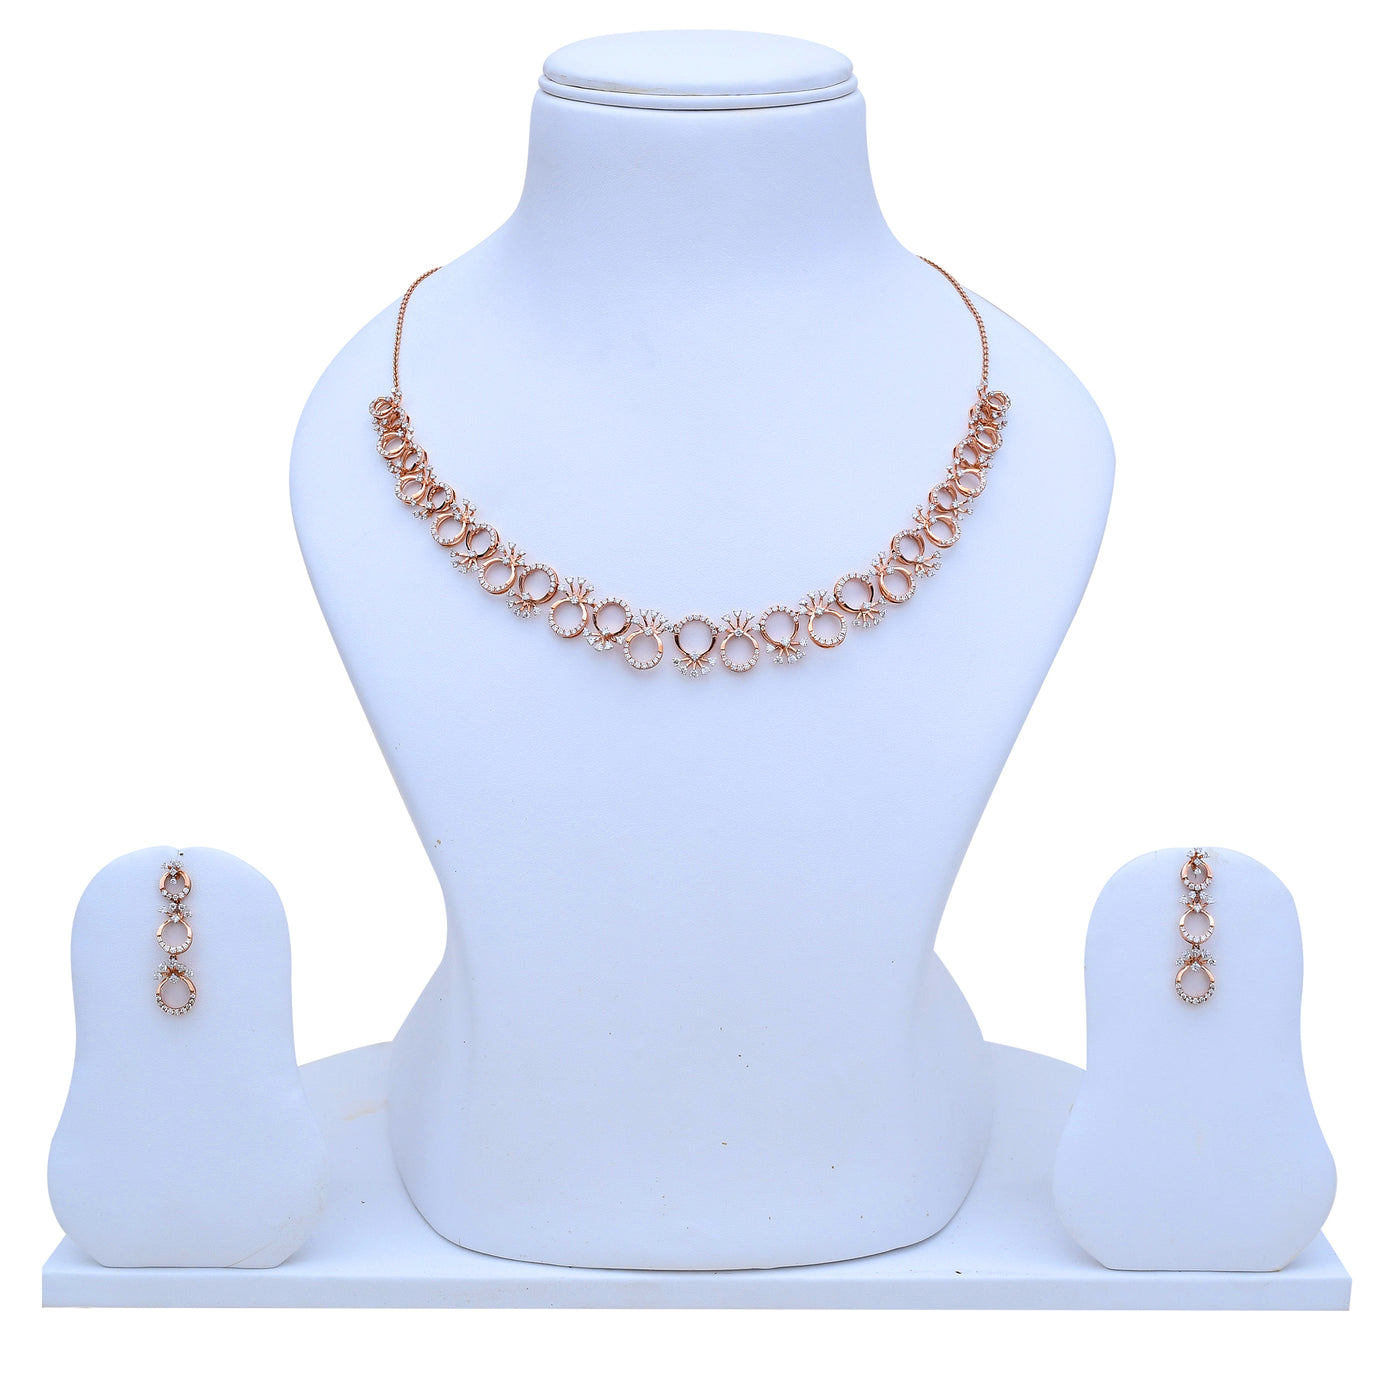 The Vienna Diamond Necklace Set